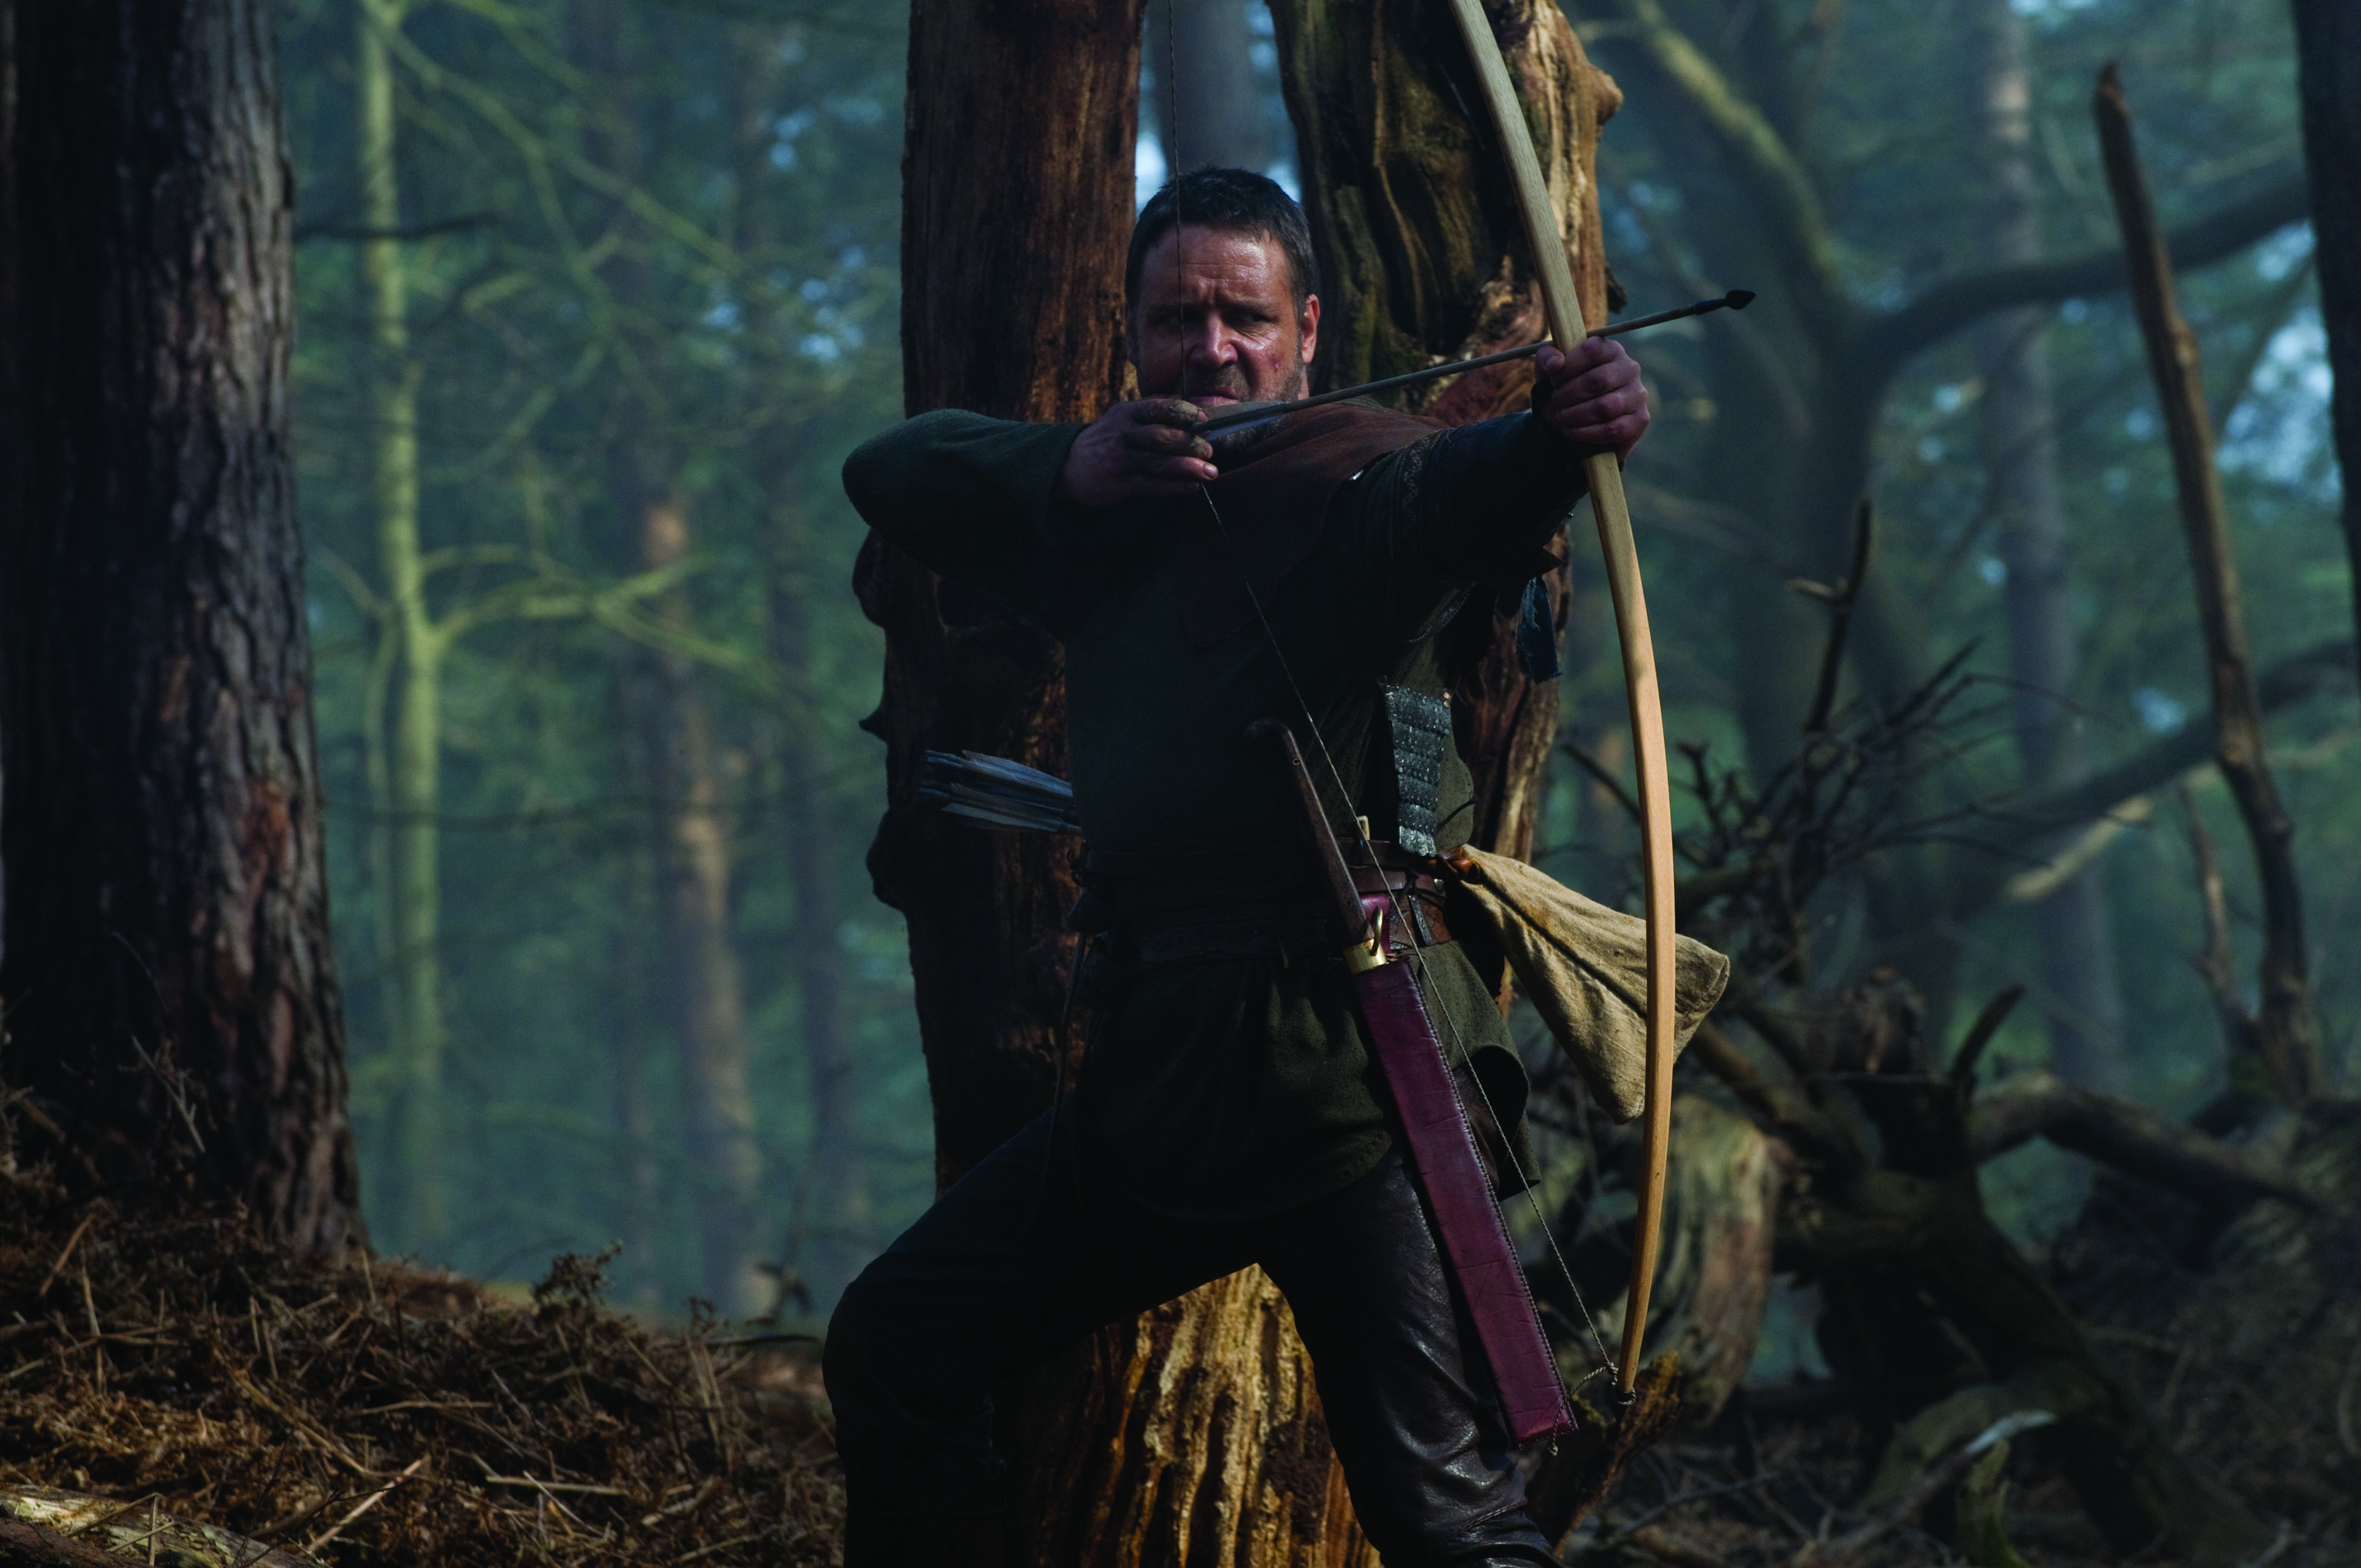 ROBIN HOOD Action Adventure Drama Robin Hood Warrior Archer Battle